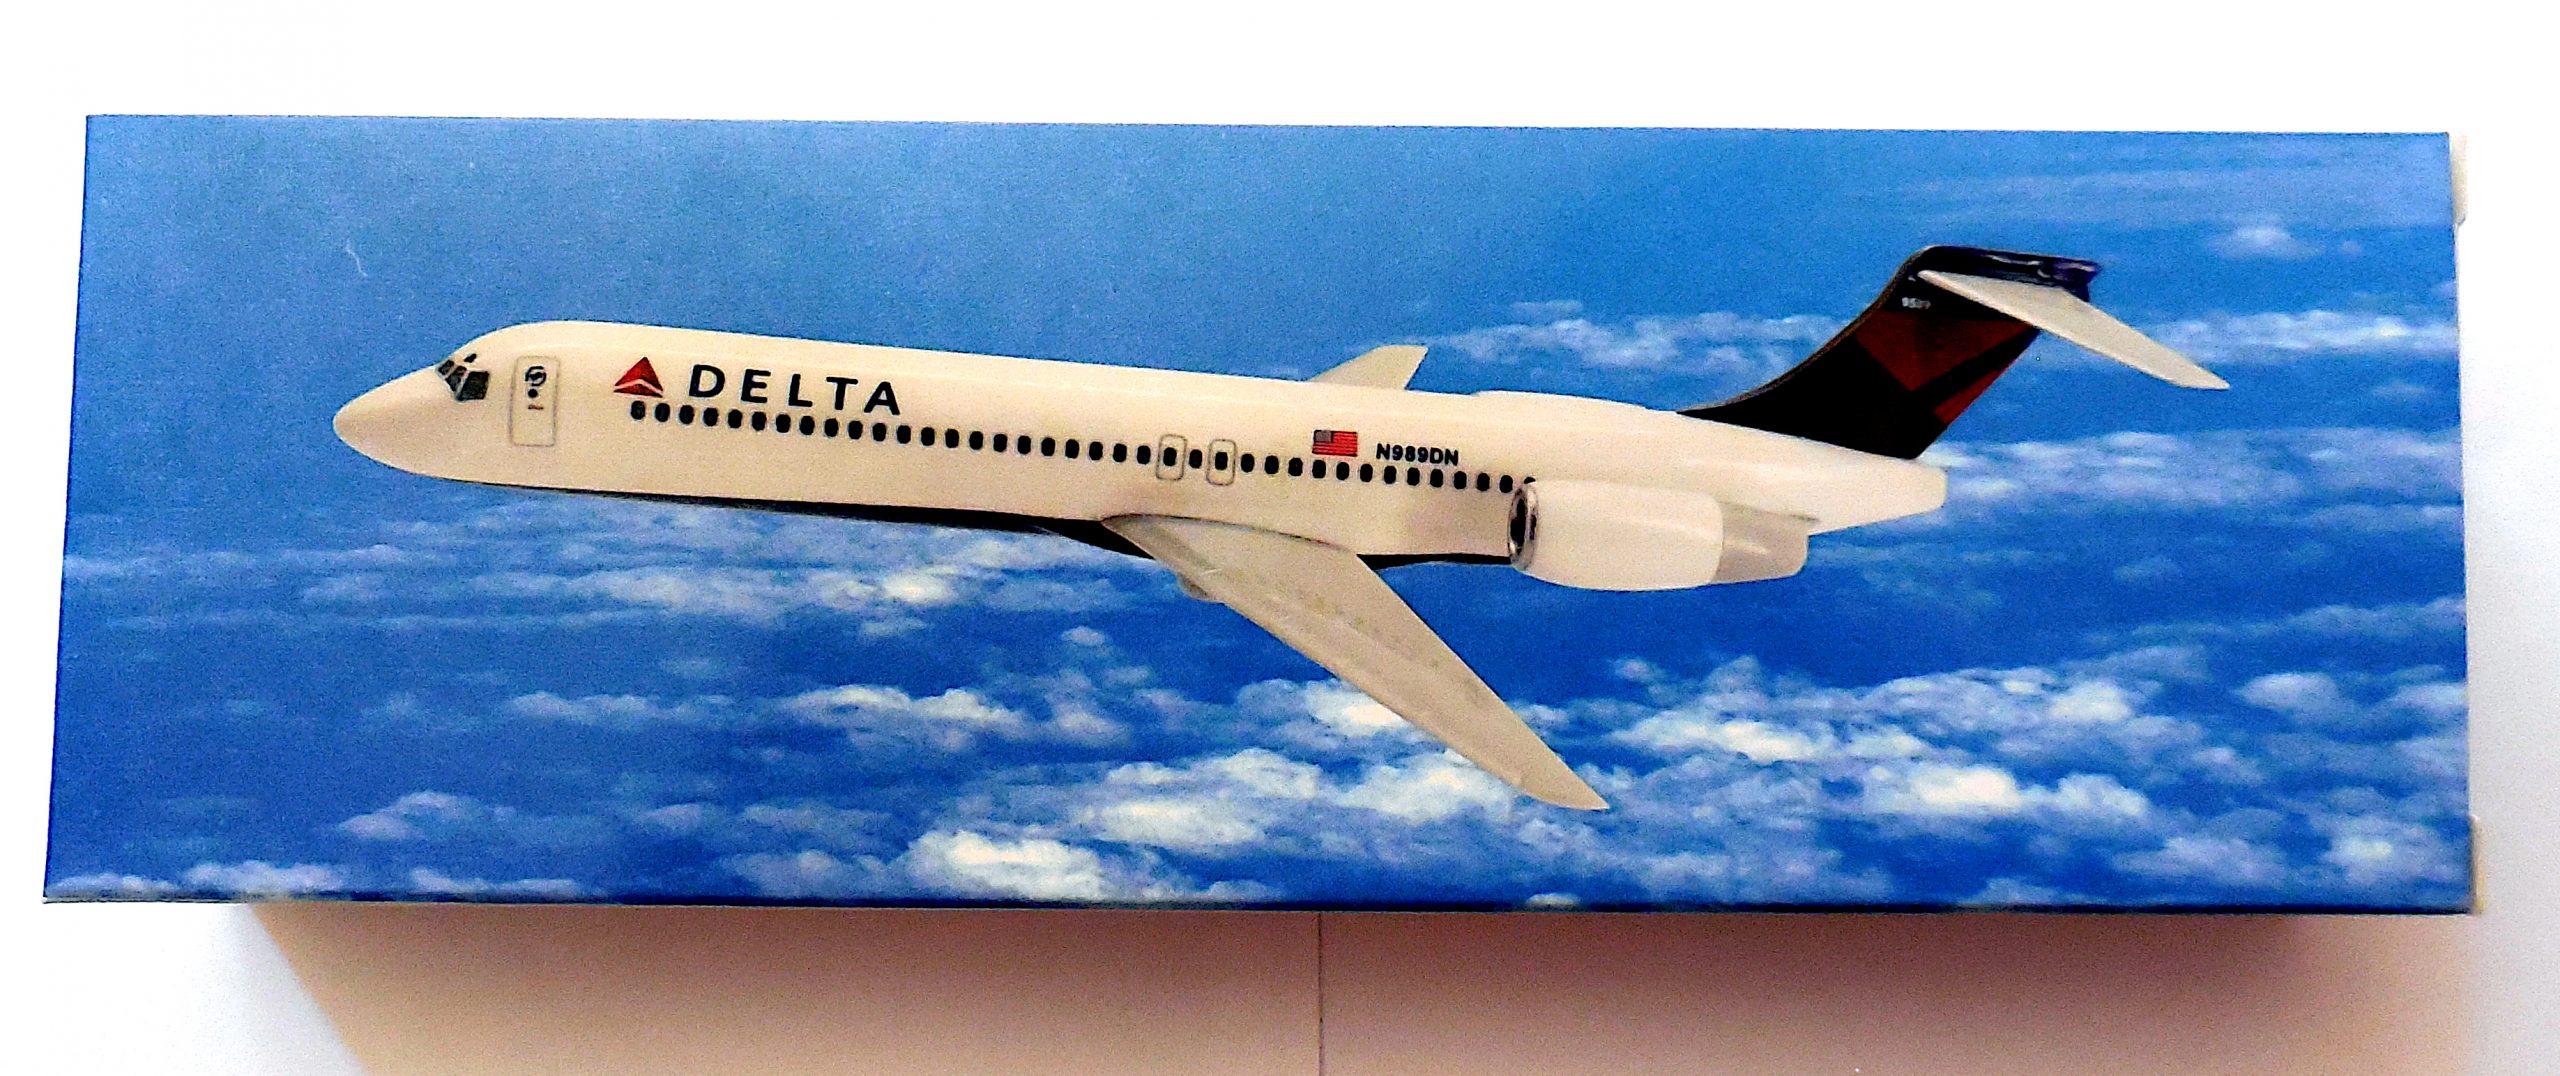 DELTA Air Lines Boeing 717-200 1:200 b717 n935at Flight Miniatures 71720h-008 